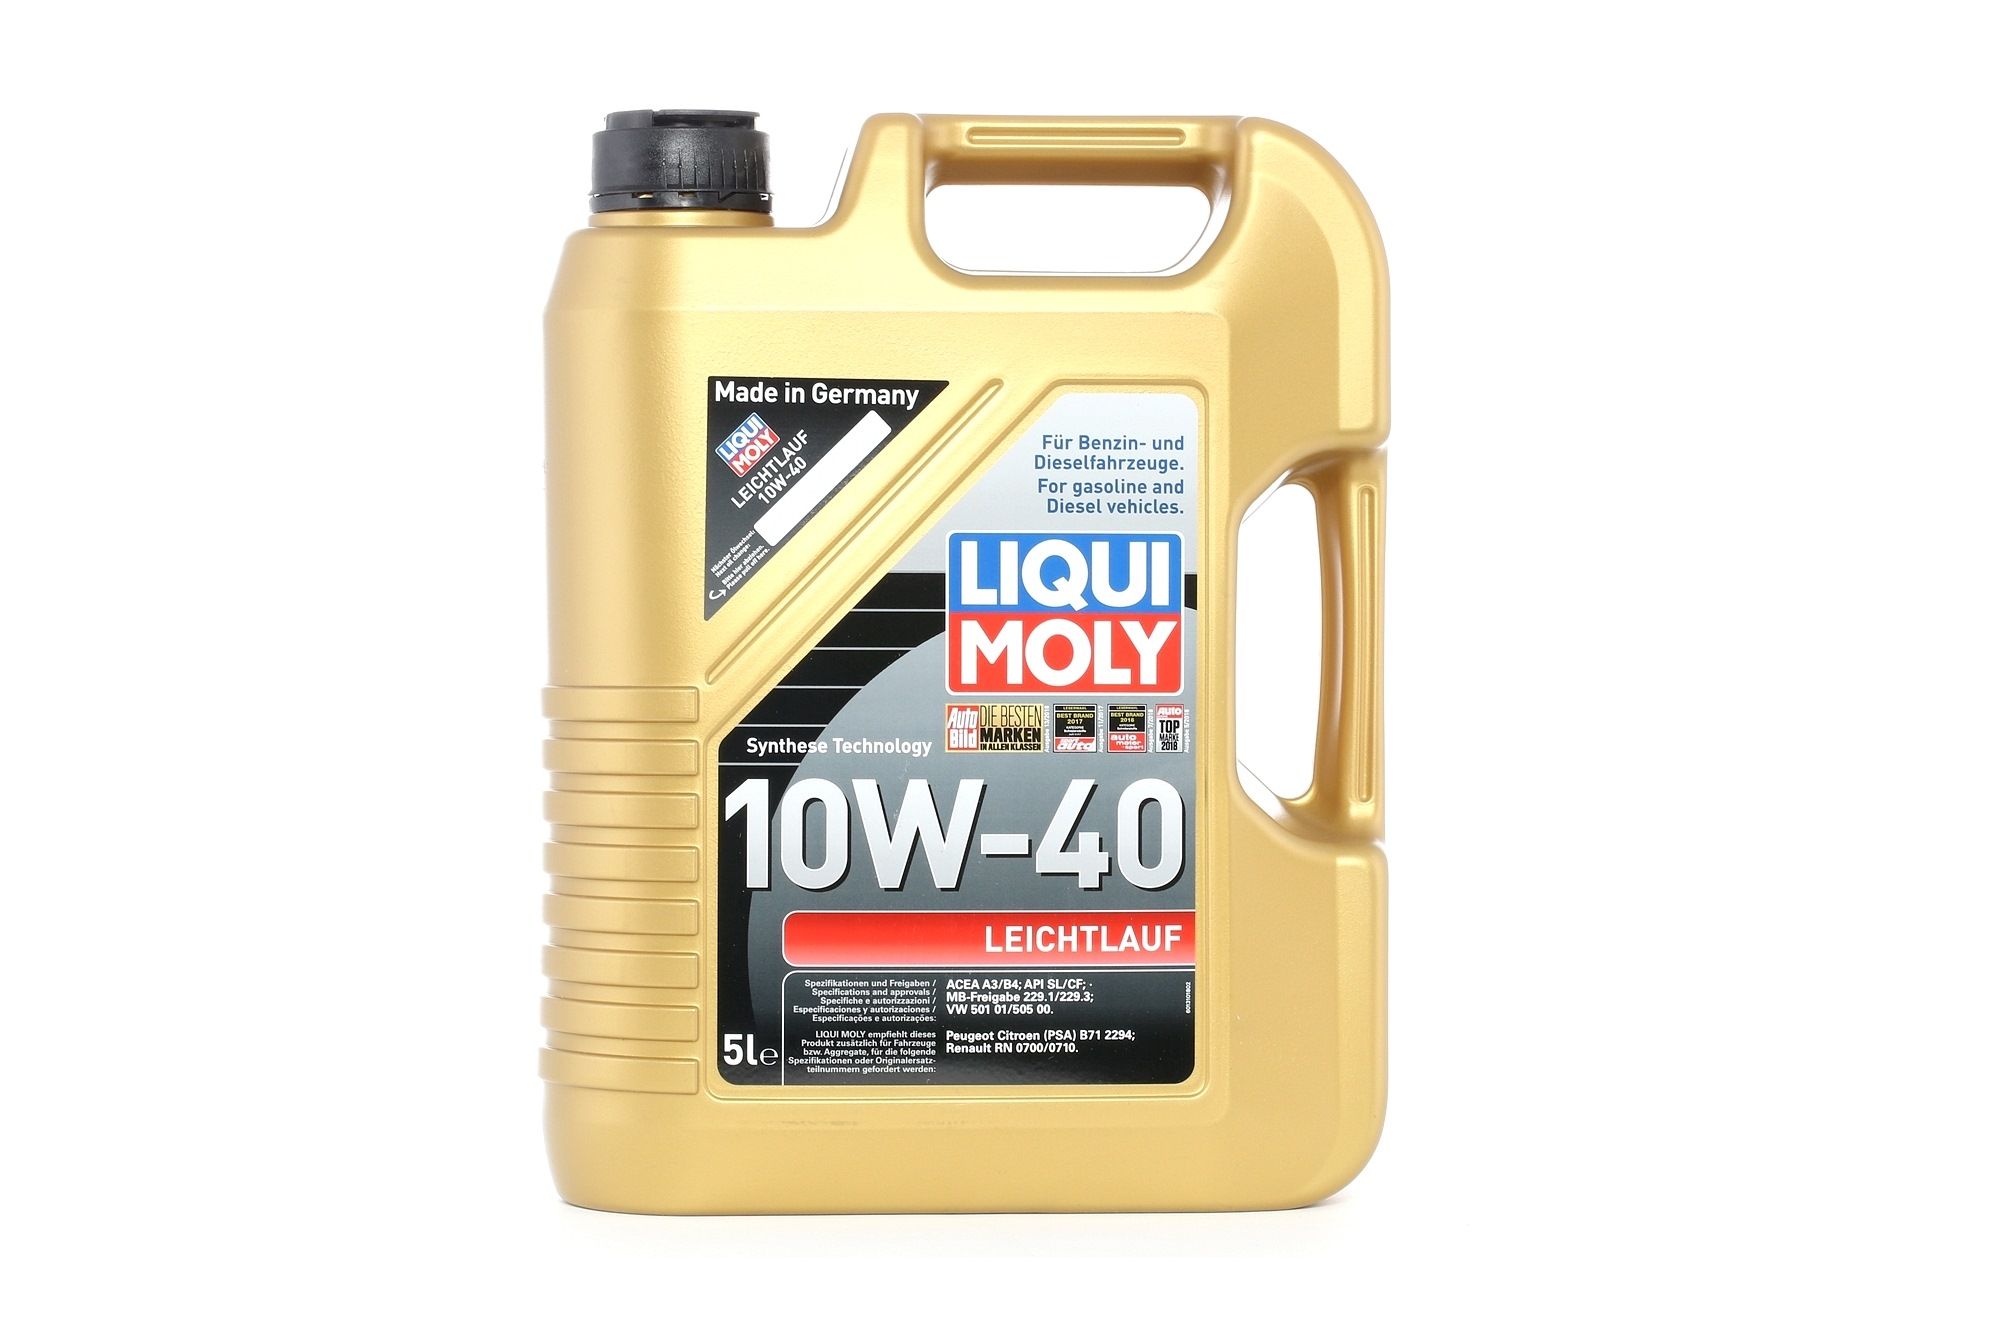 LIQUI MOLY Leichtlauf 1310 Moottoriöljy 10W-40, 5l, Osasynteettinen öljy